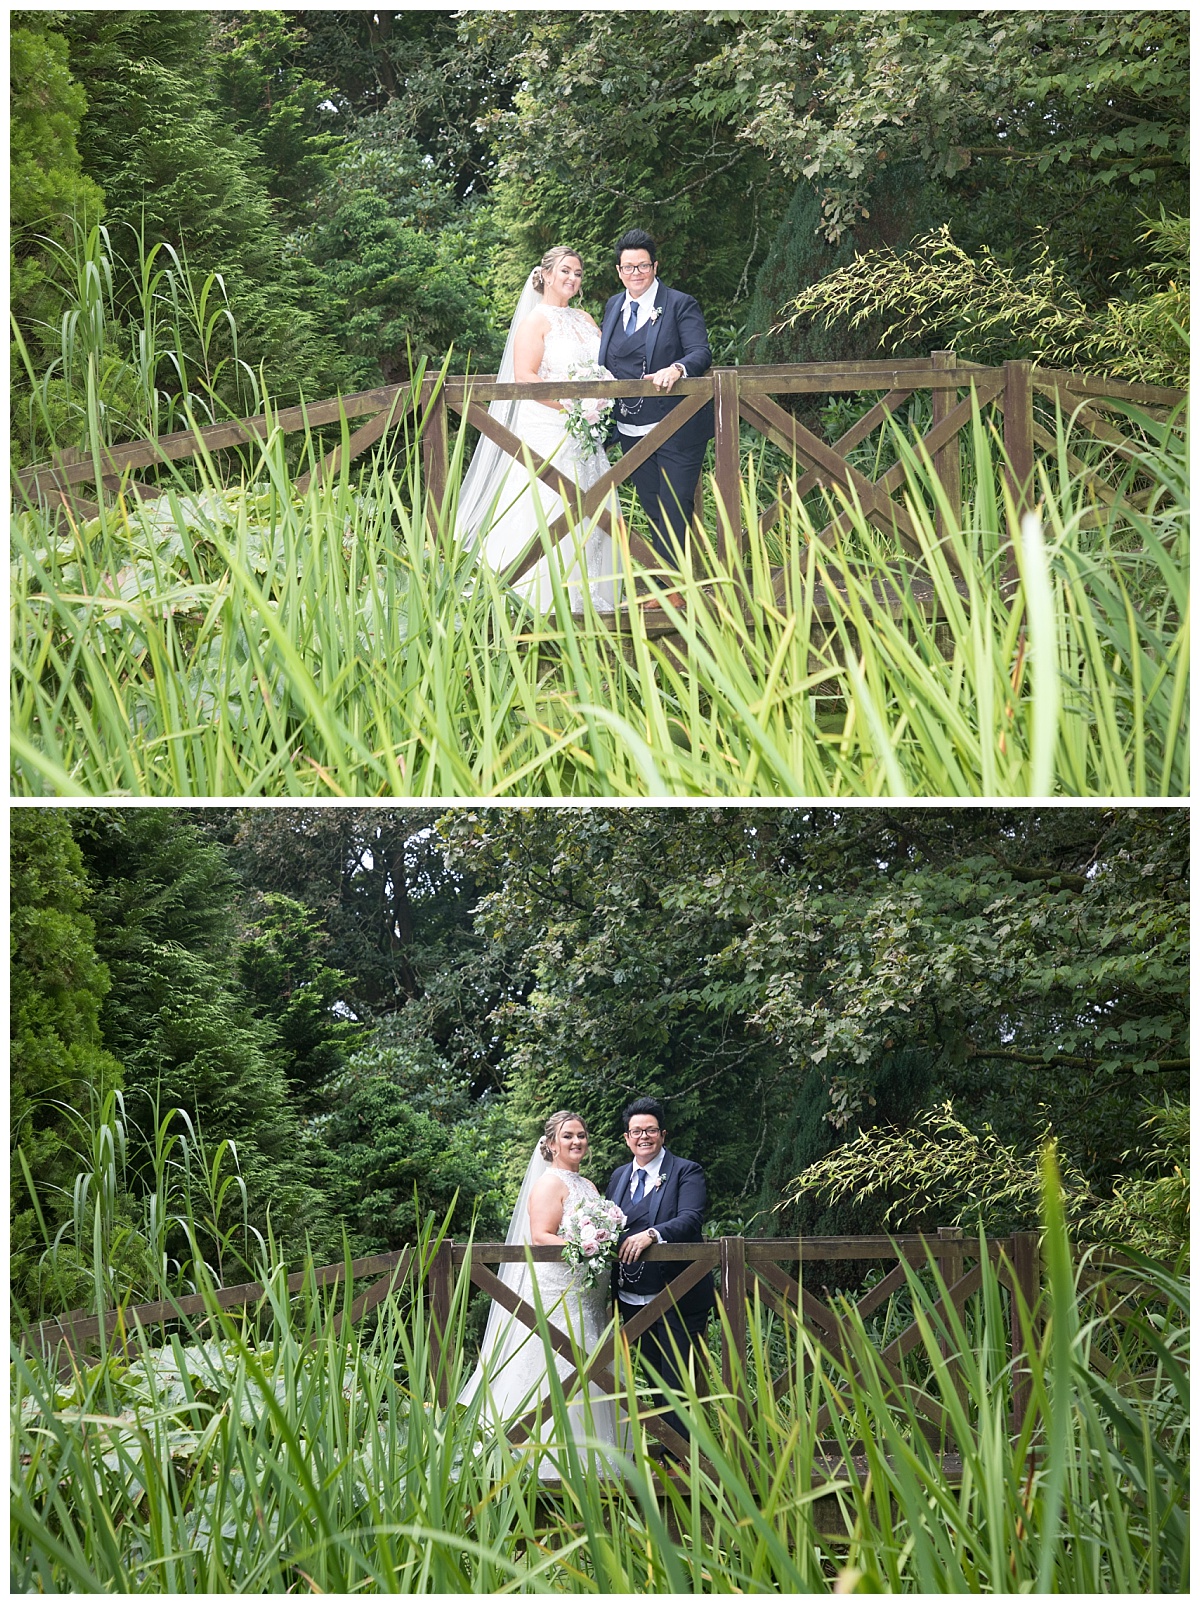 Wedding Photography Manchester - Nicky and Nichola's Nunsmere Hall Wedding Day 61